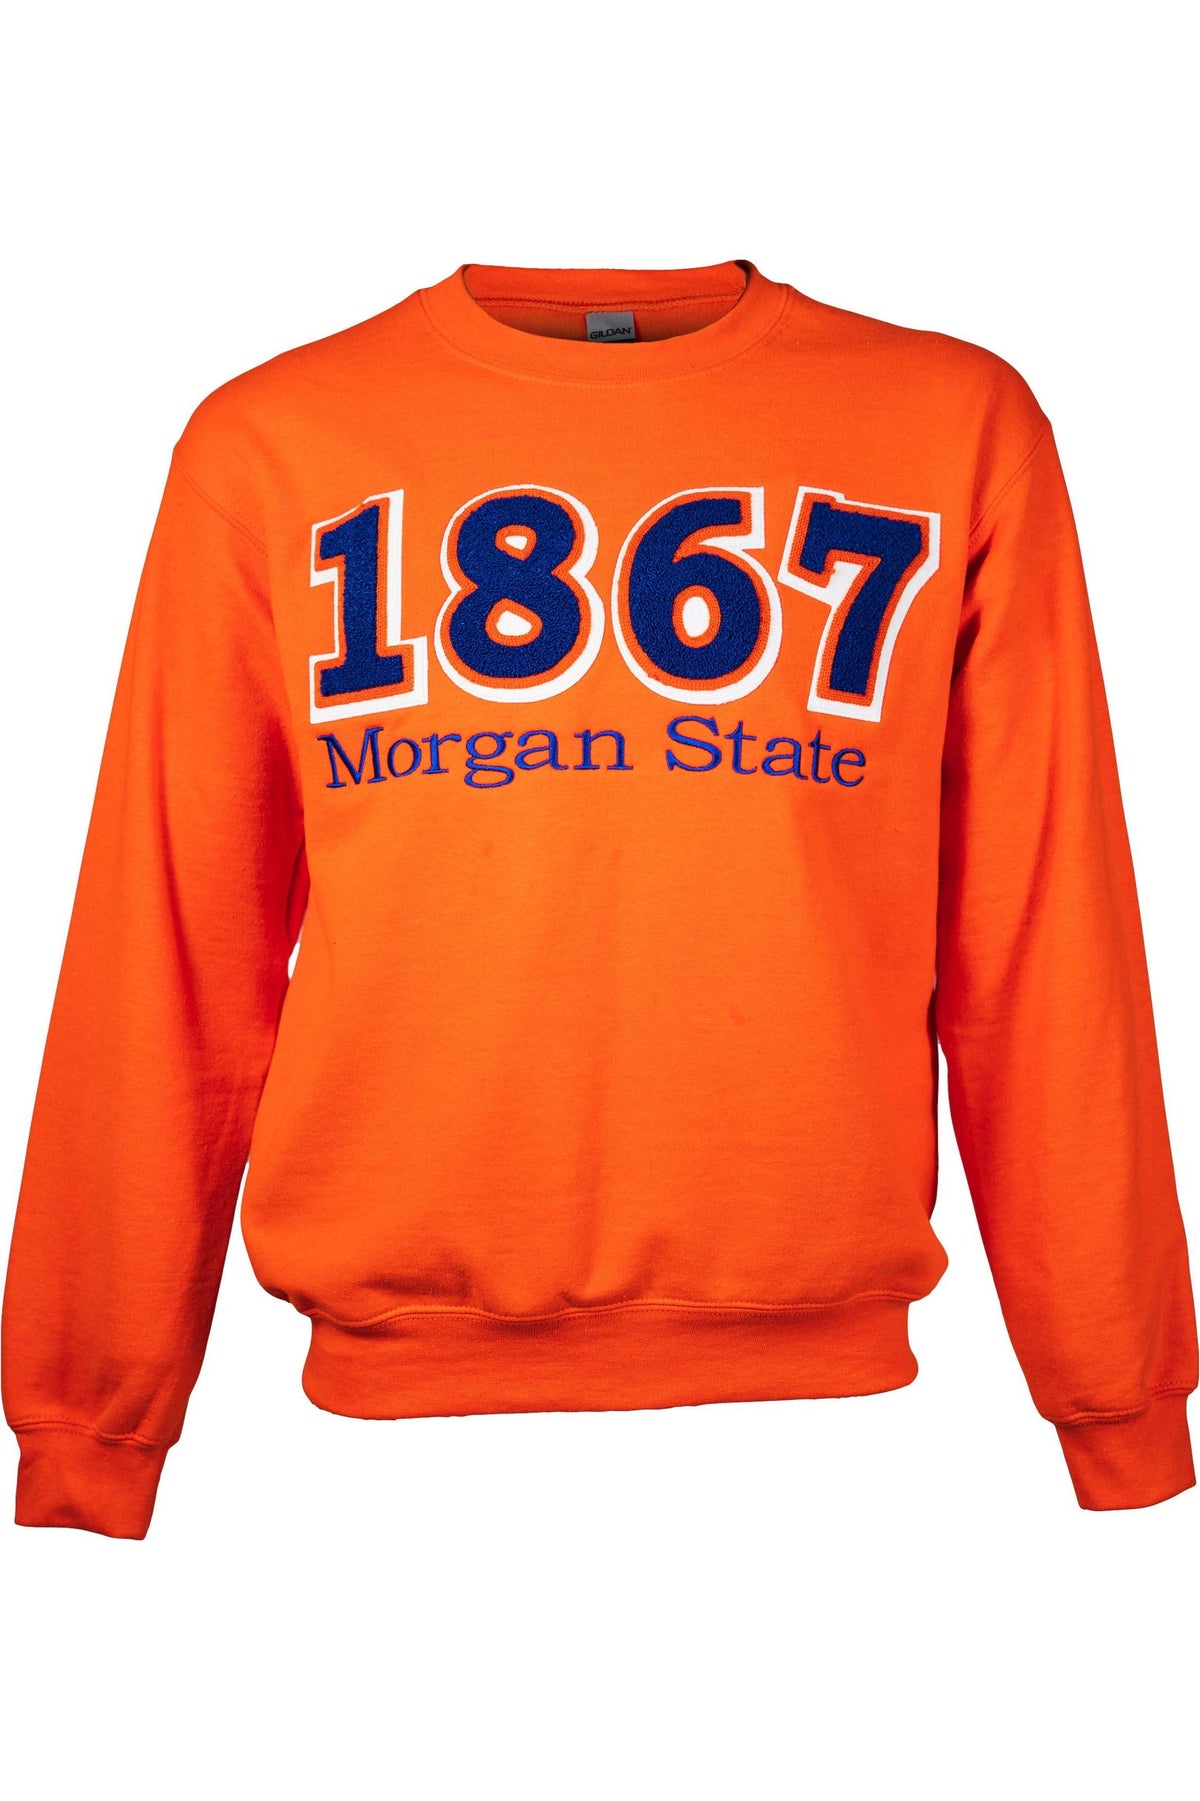 1867 Morgan State Sweatshirt (Unisex)